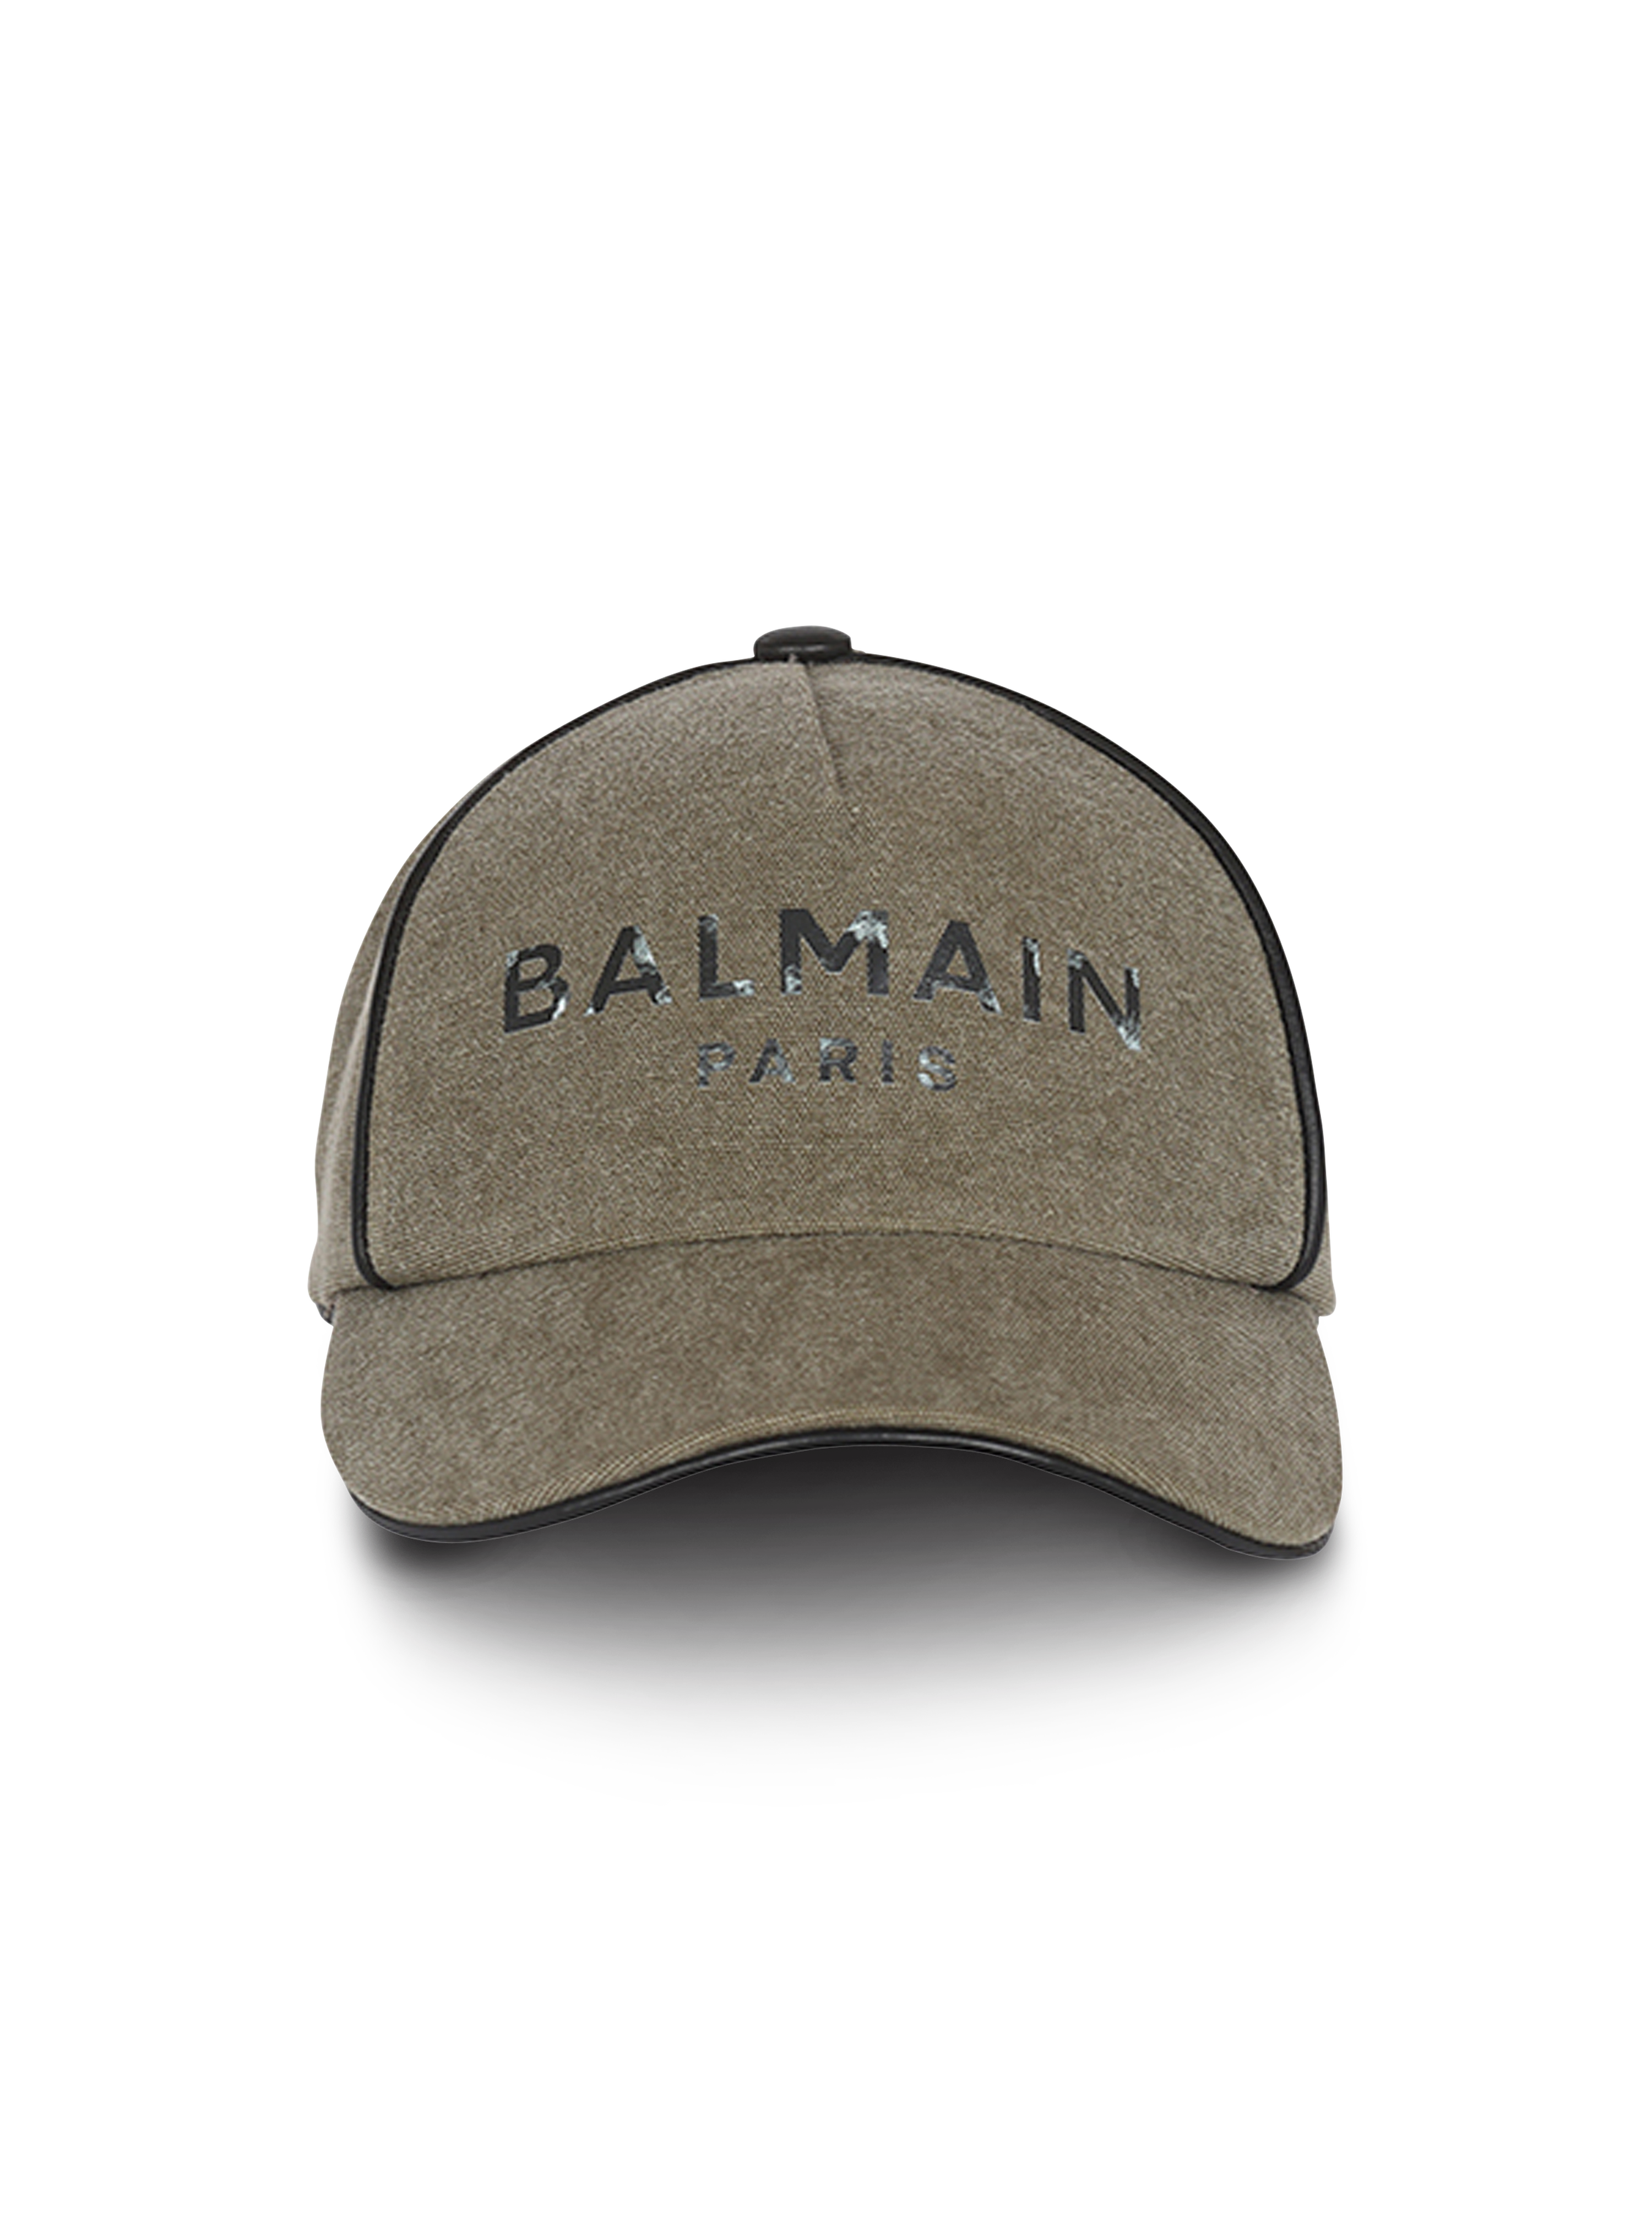 Cotton canvas cap with Balmain Paris logo, khaki